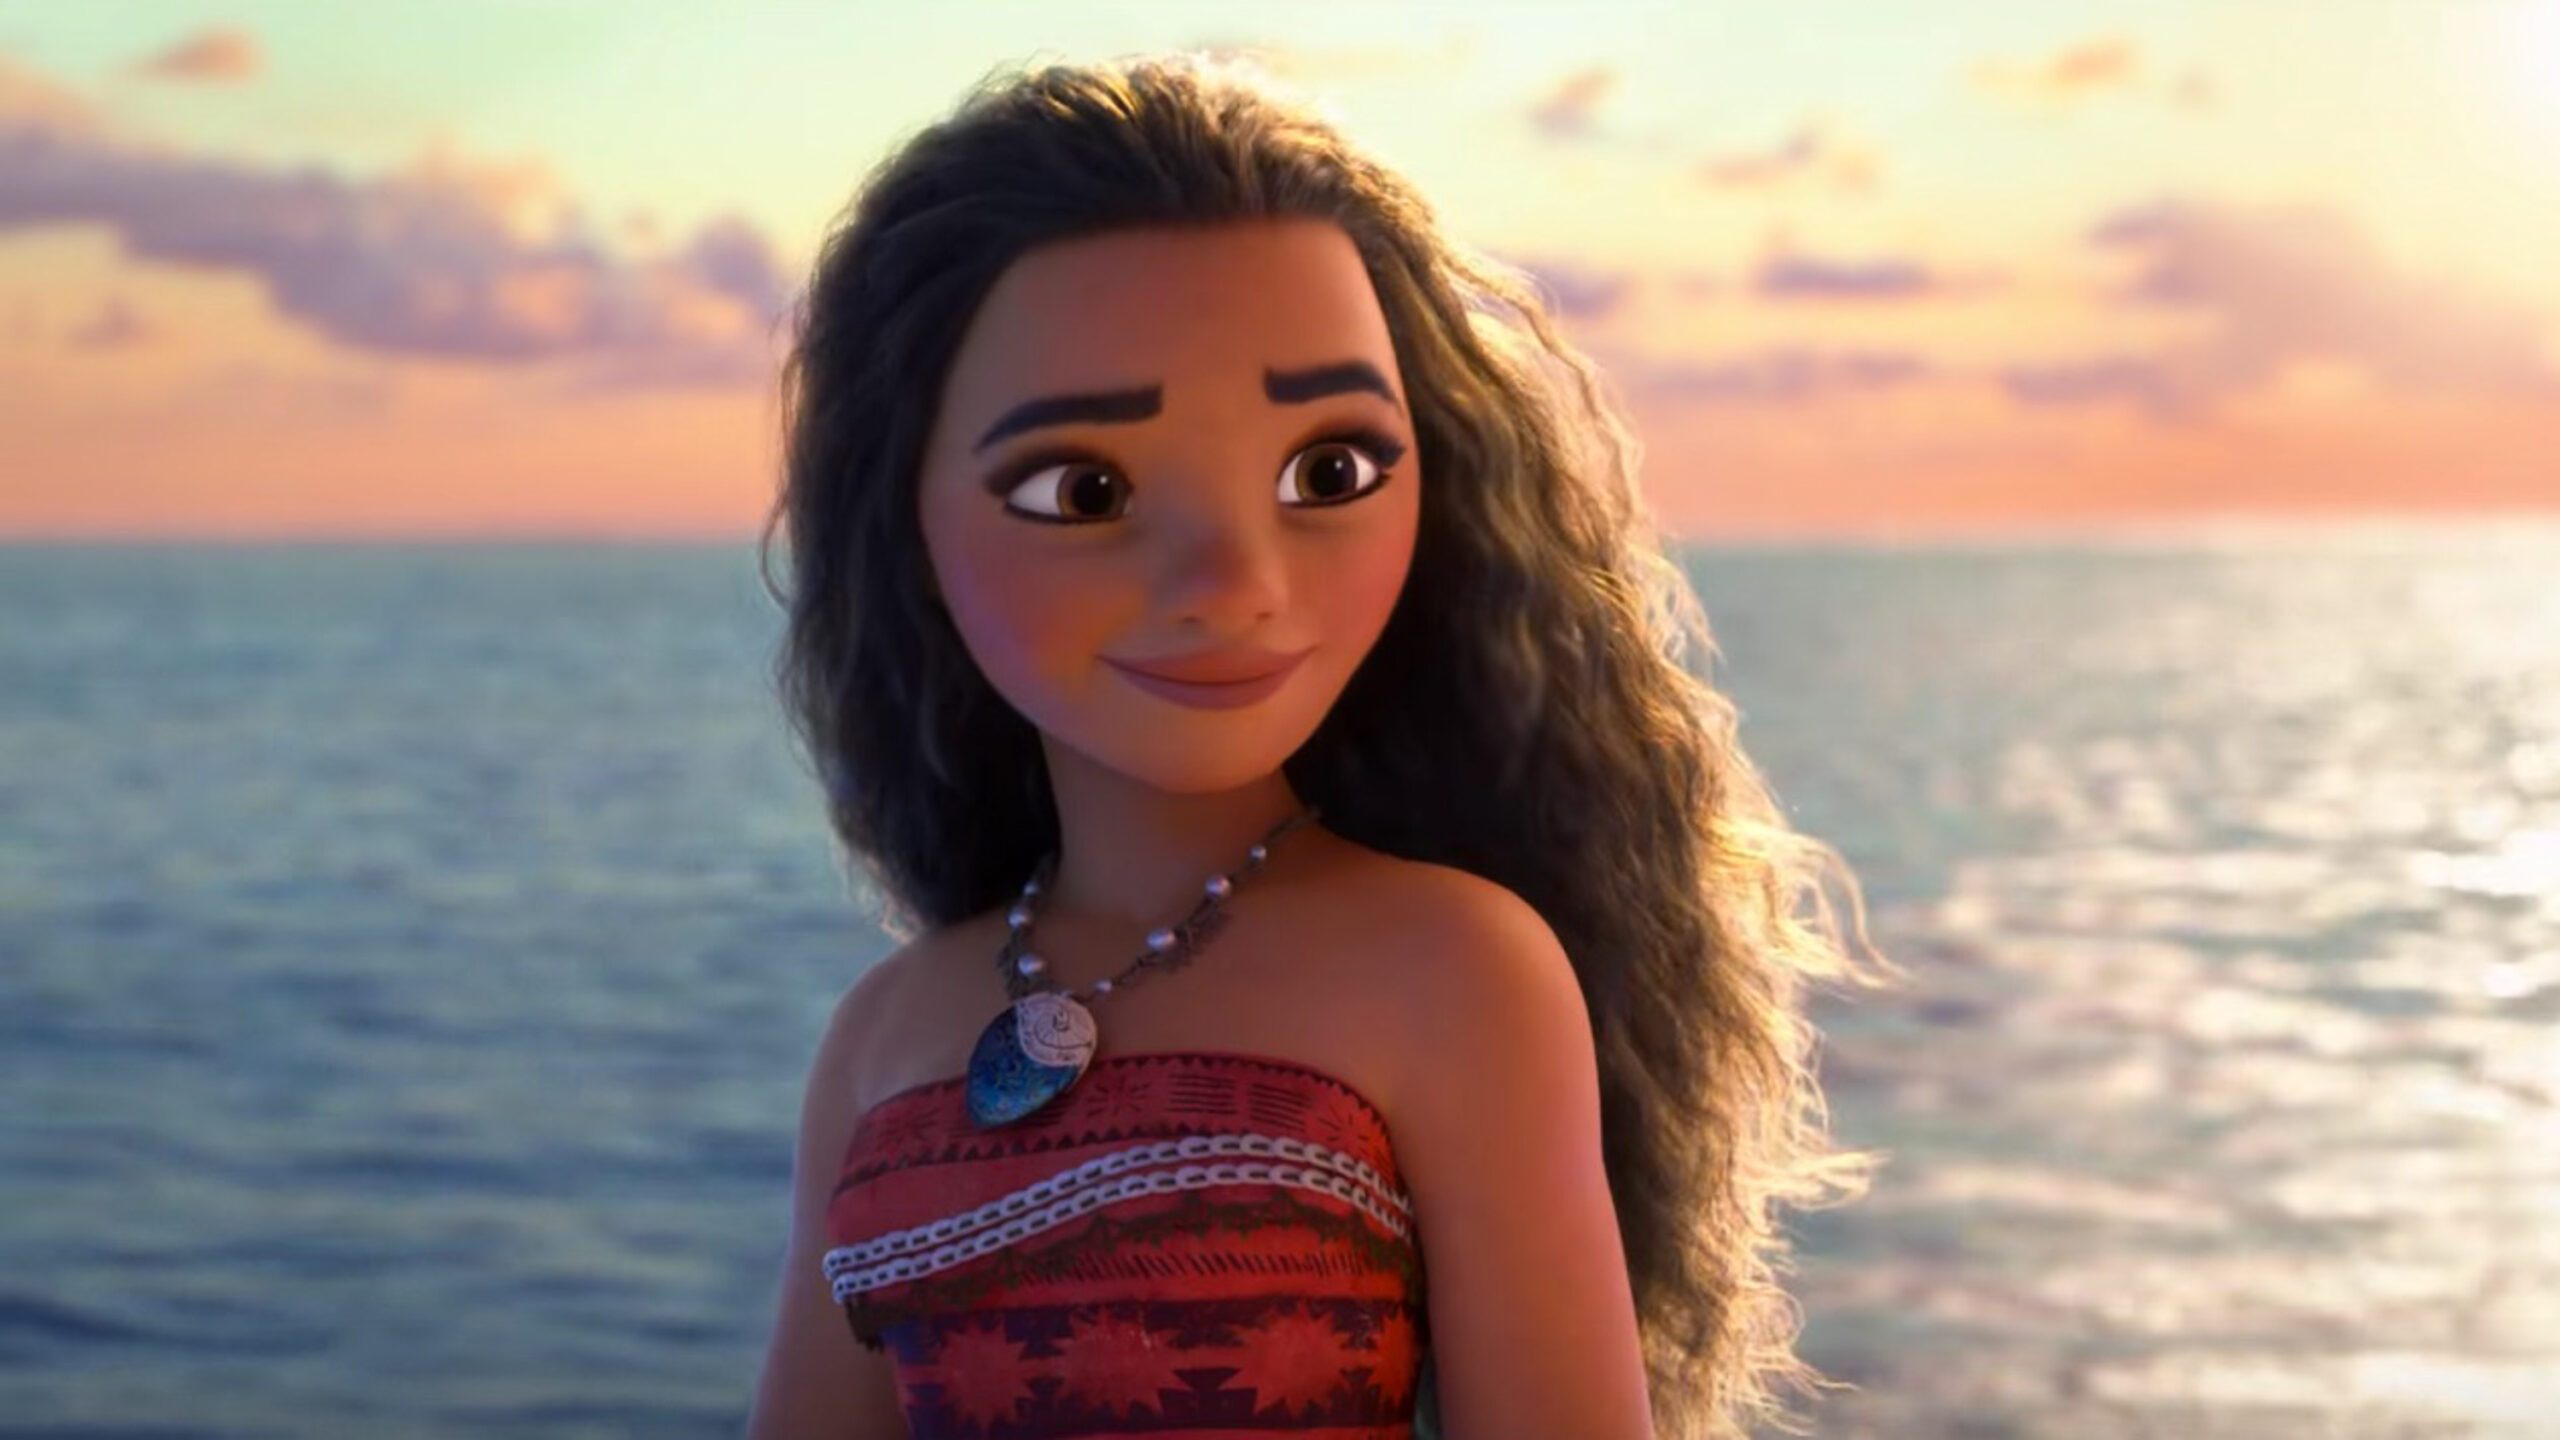 WATCH: Disney releases first ‘Moana’ teaser trailer